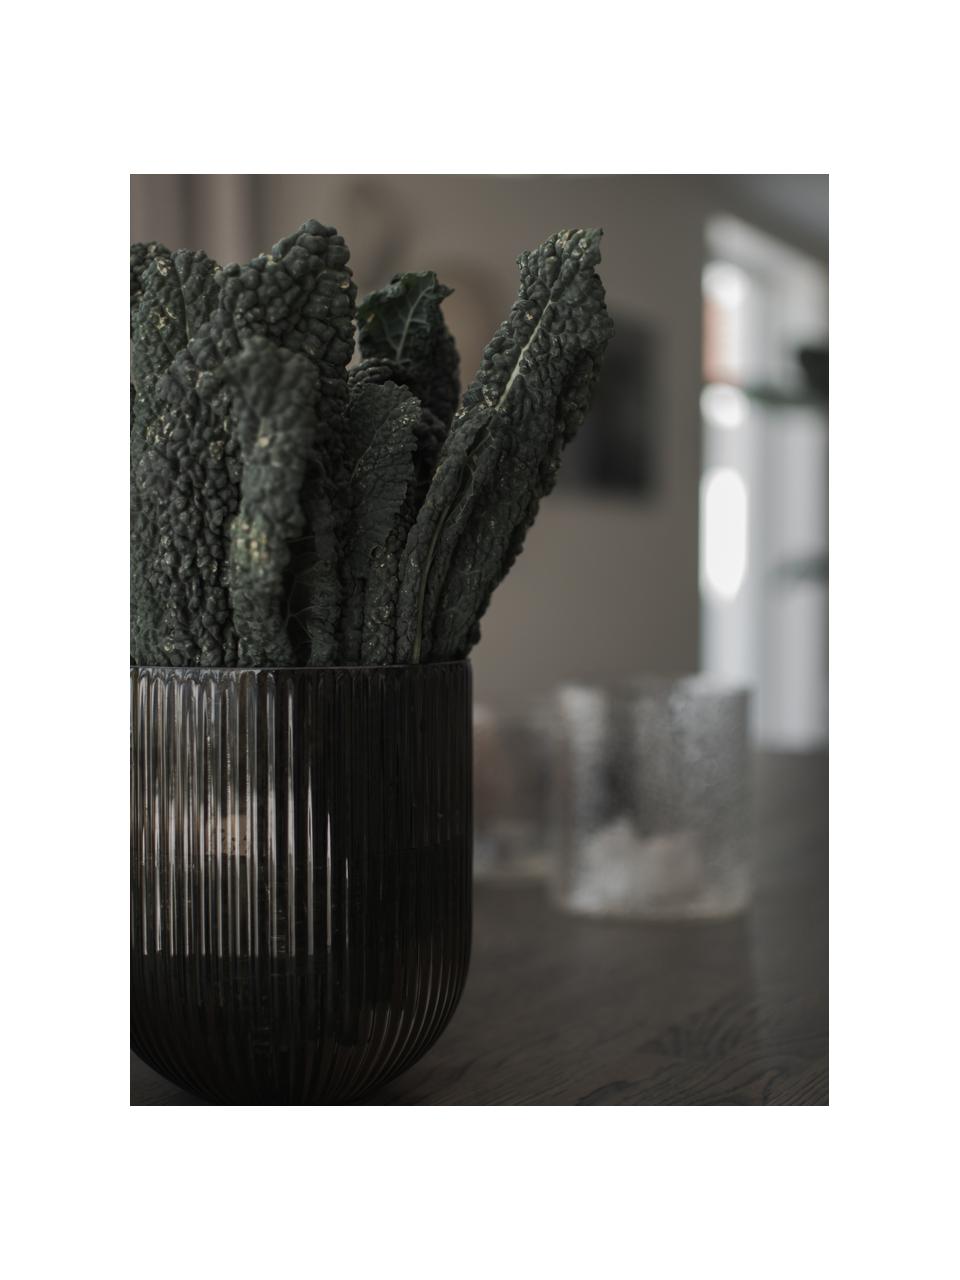 Skleněná váza Simple Stripe, V 18 cm, Sklo, Greige, poloprůhledná, Ø 16 cm, V 18 cm